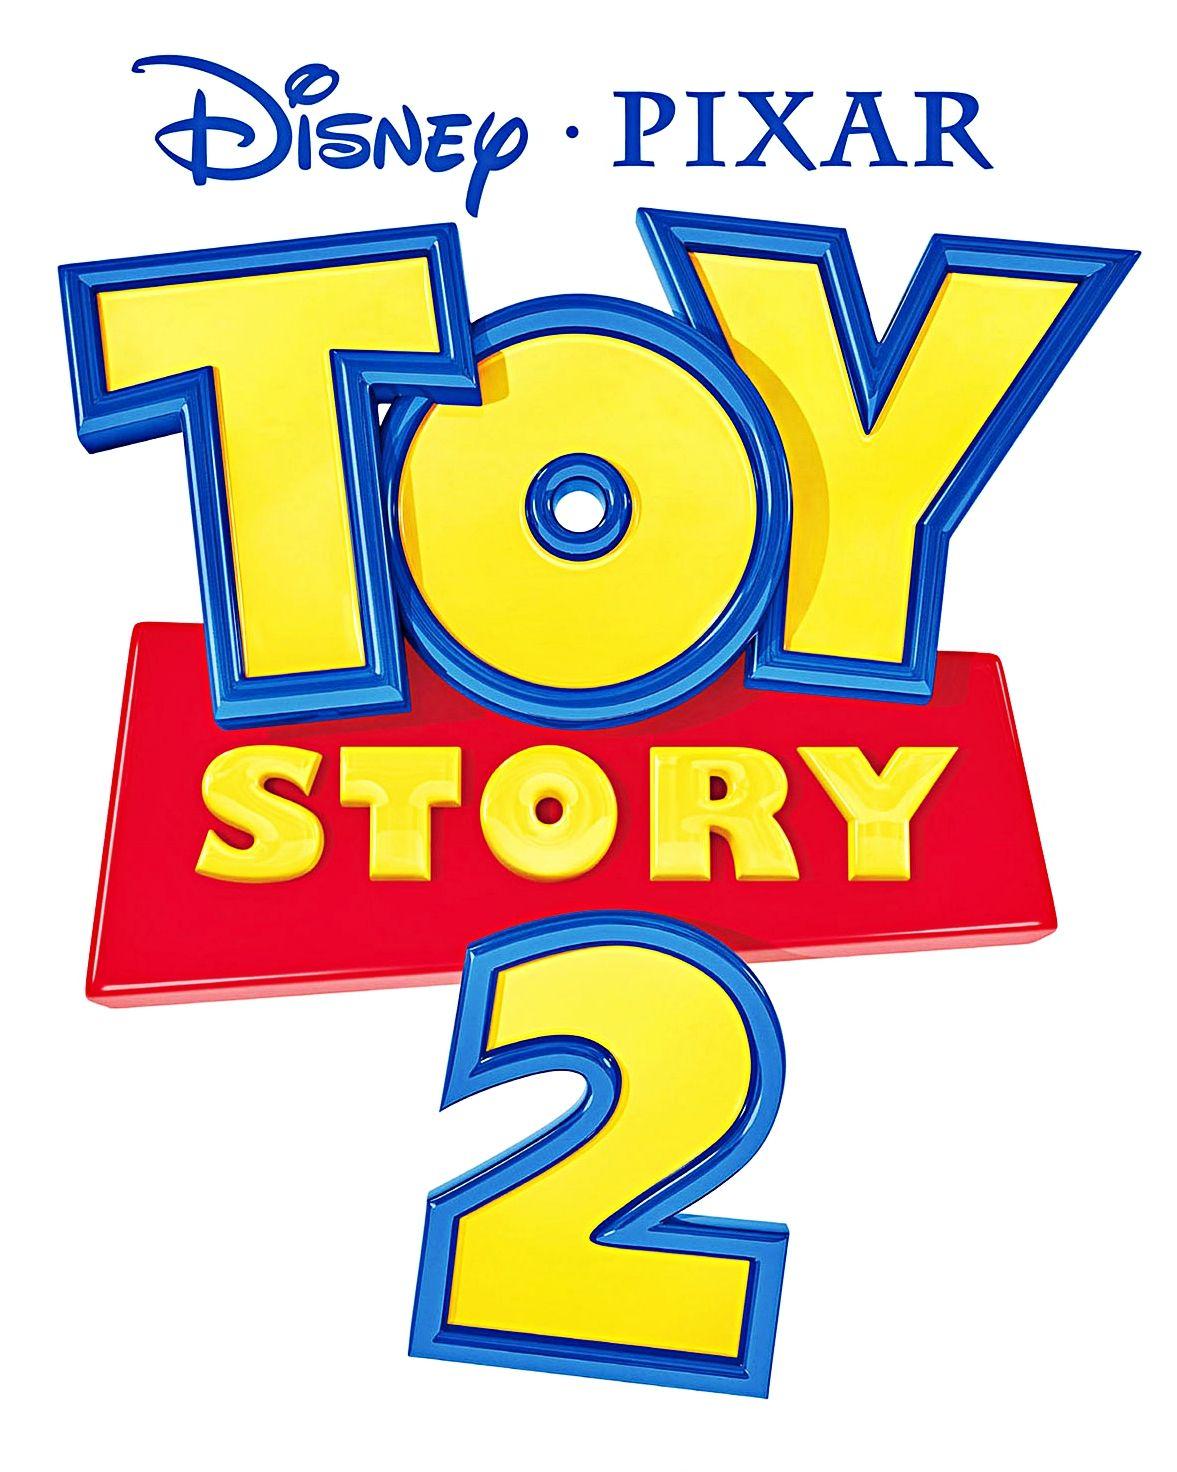 Disney Pixar Toy Story Logo - Disney pixar toy story Logos